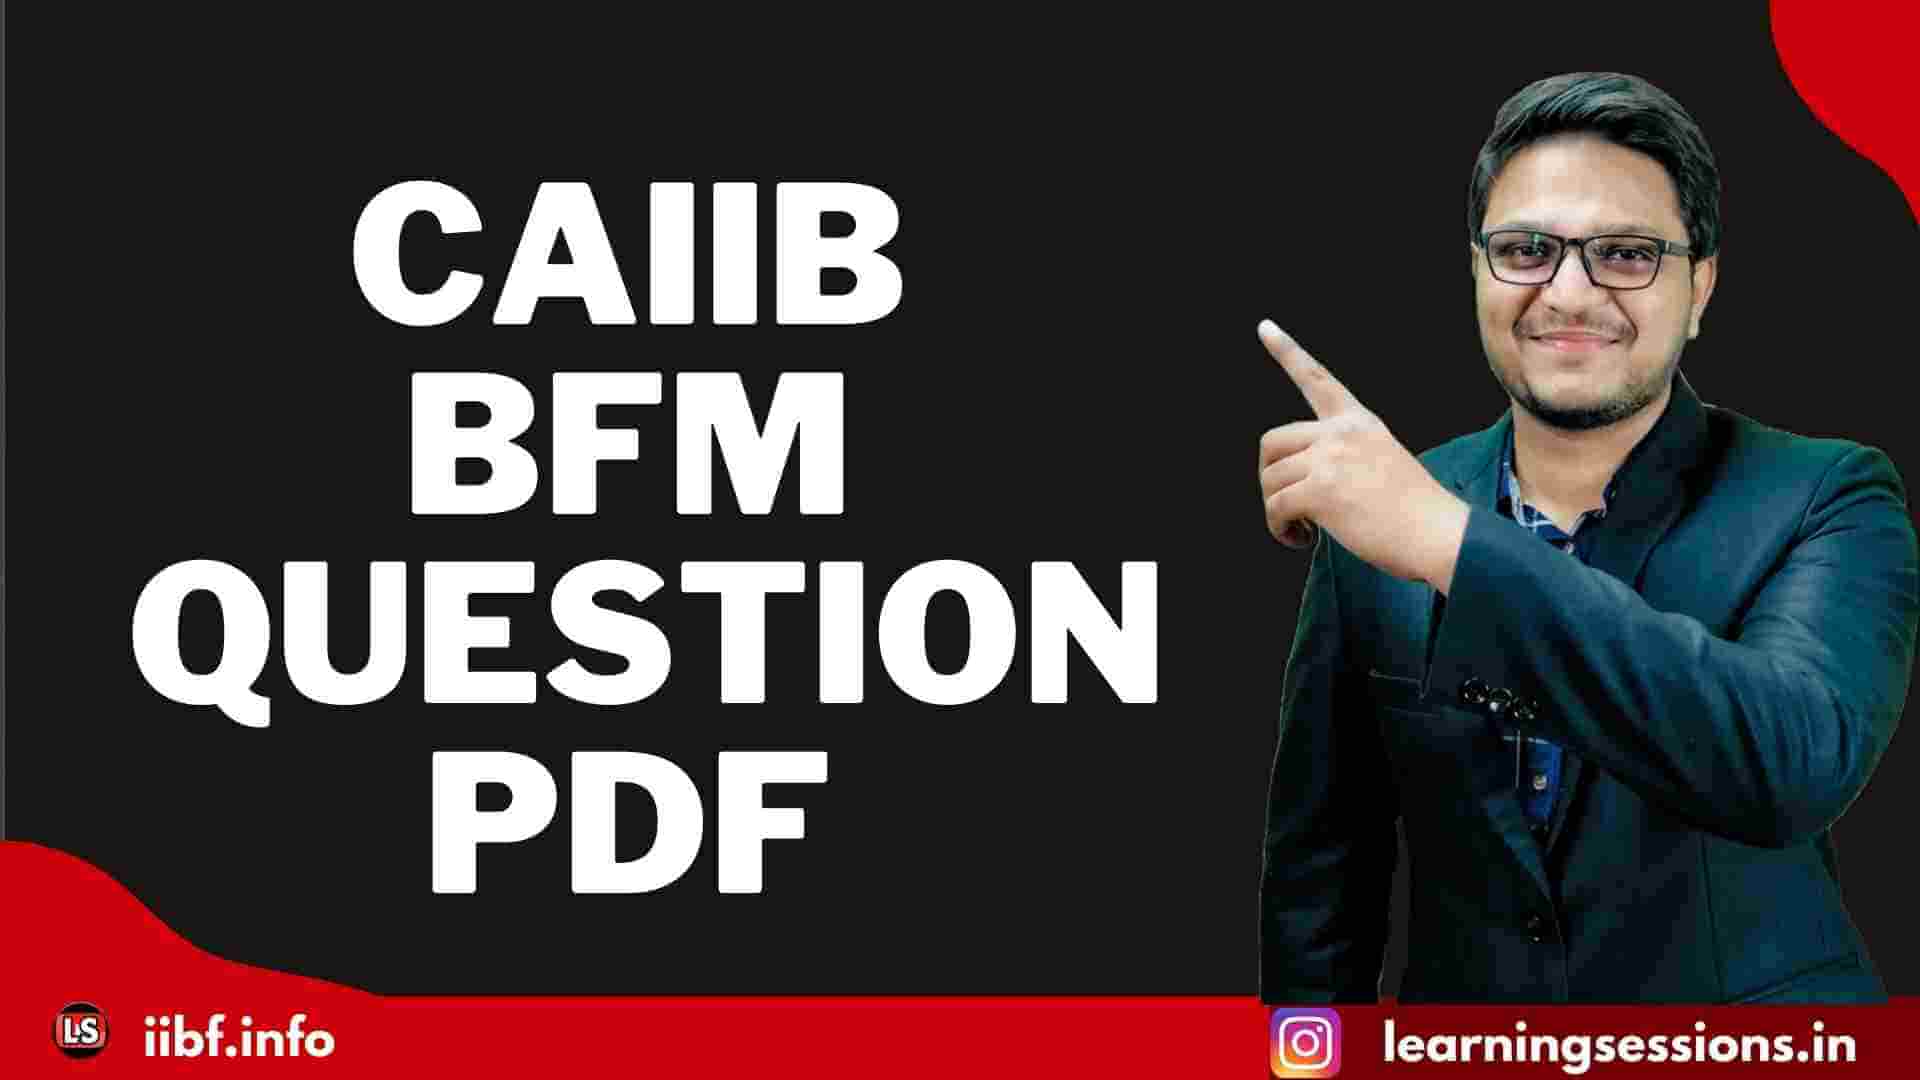 IIBF CAIIB BFM QUESTION PDF - Bank Financial Management